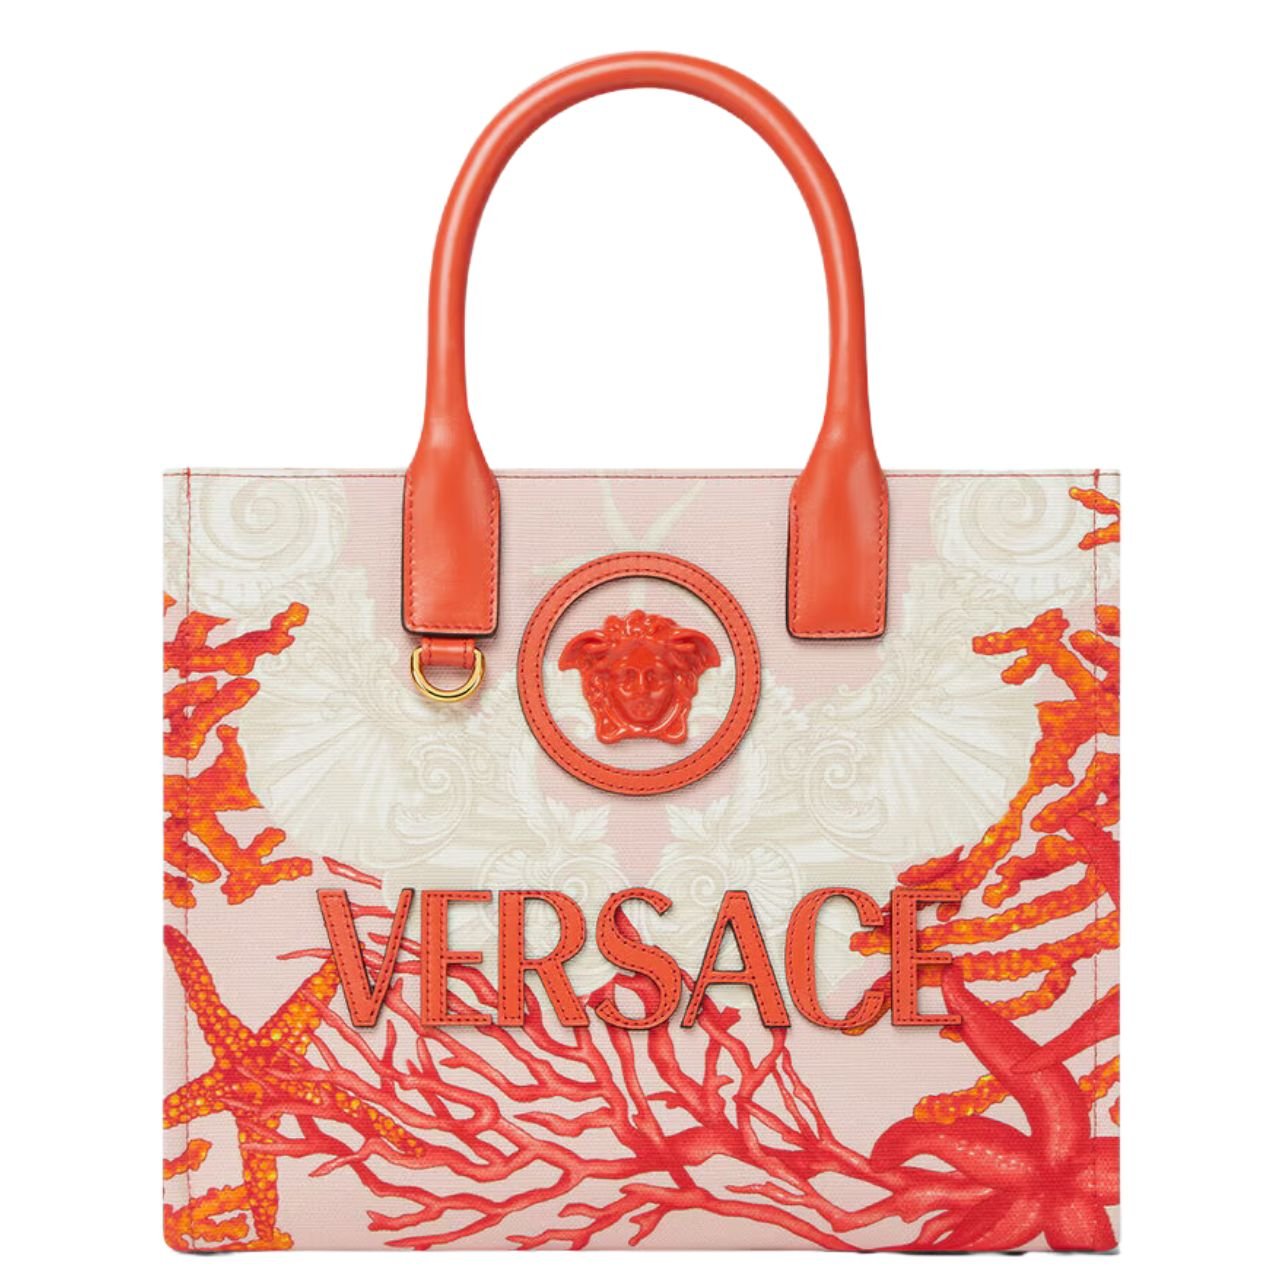 Versace canvas tote bag with sea print in orange